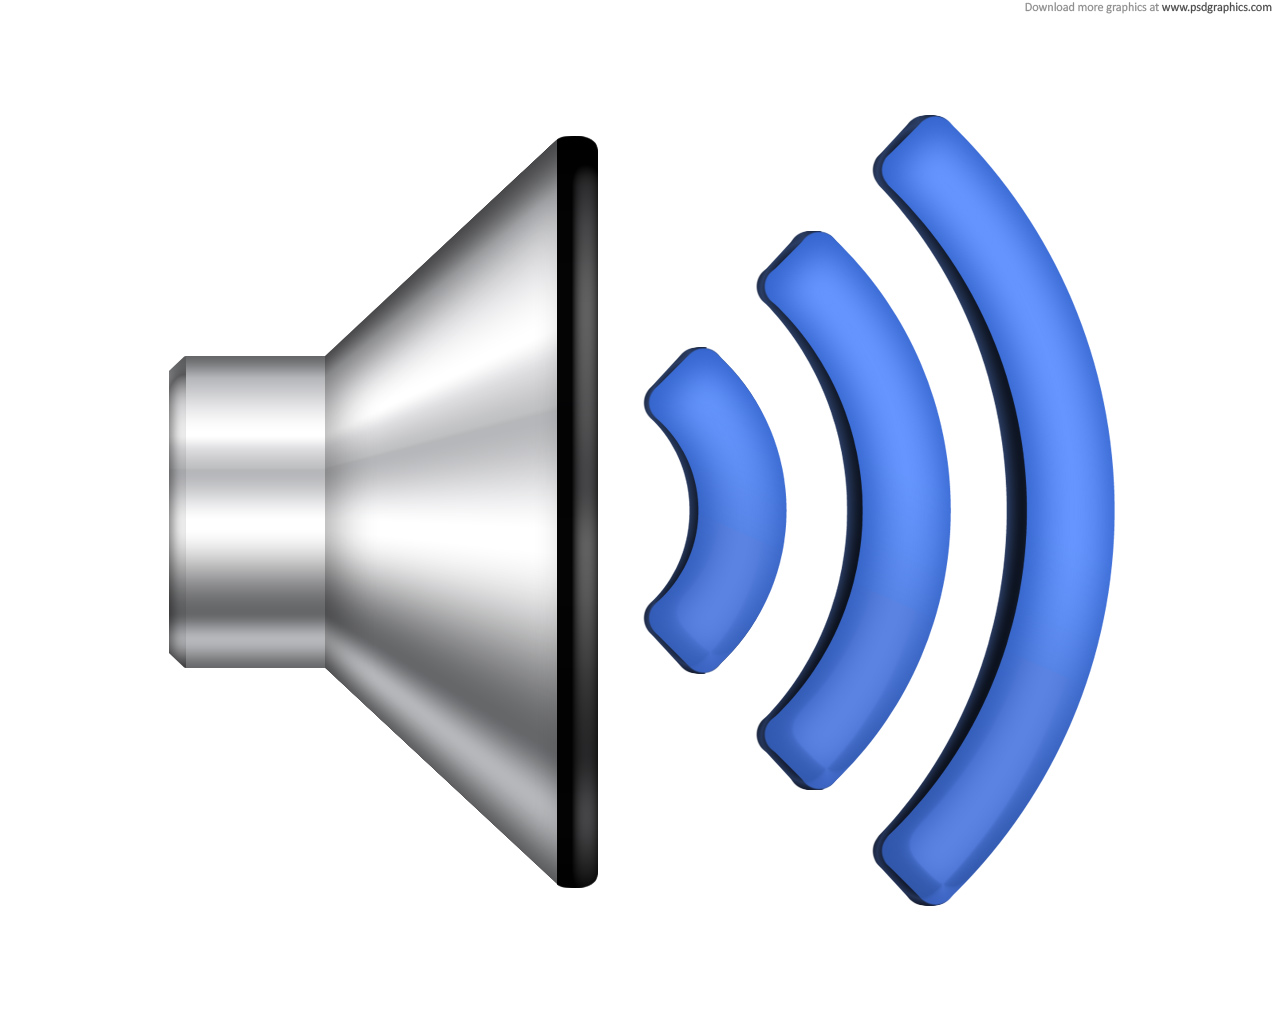 Speaker Volume Icon